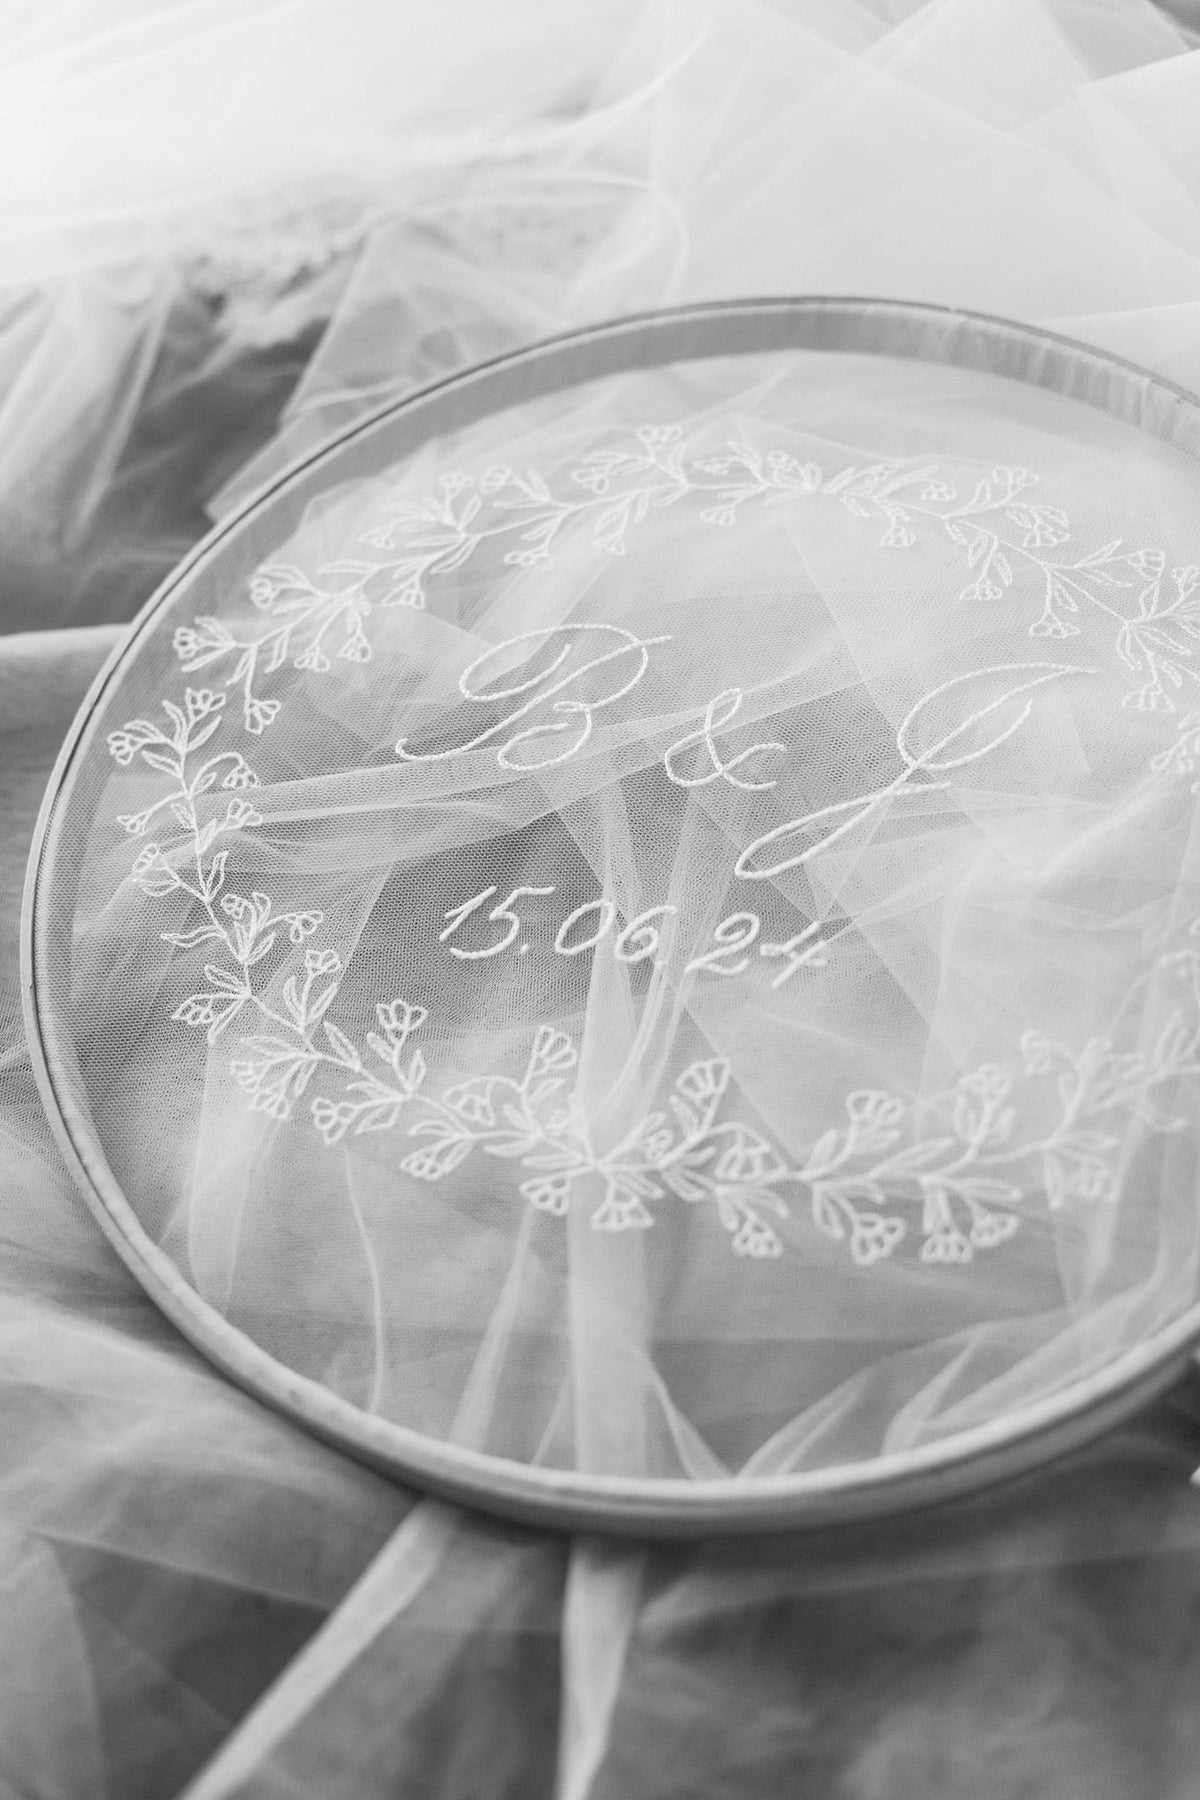 Wedding Veil Drop wedding veil with delicate lace edge - &#39;Adia&#39;